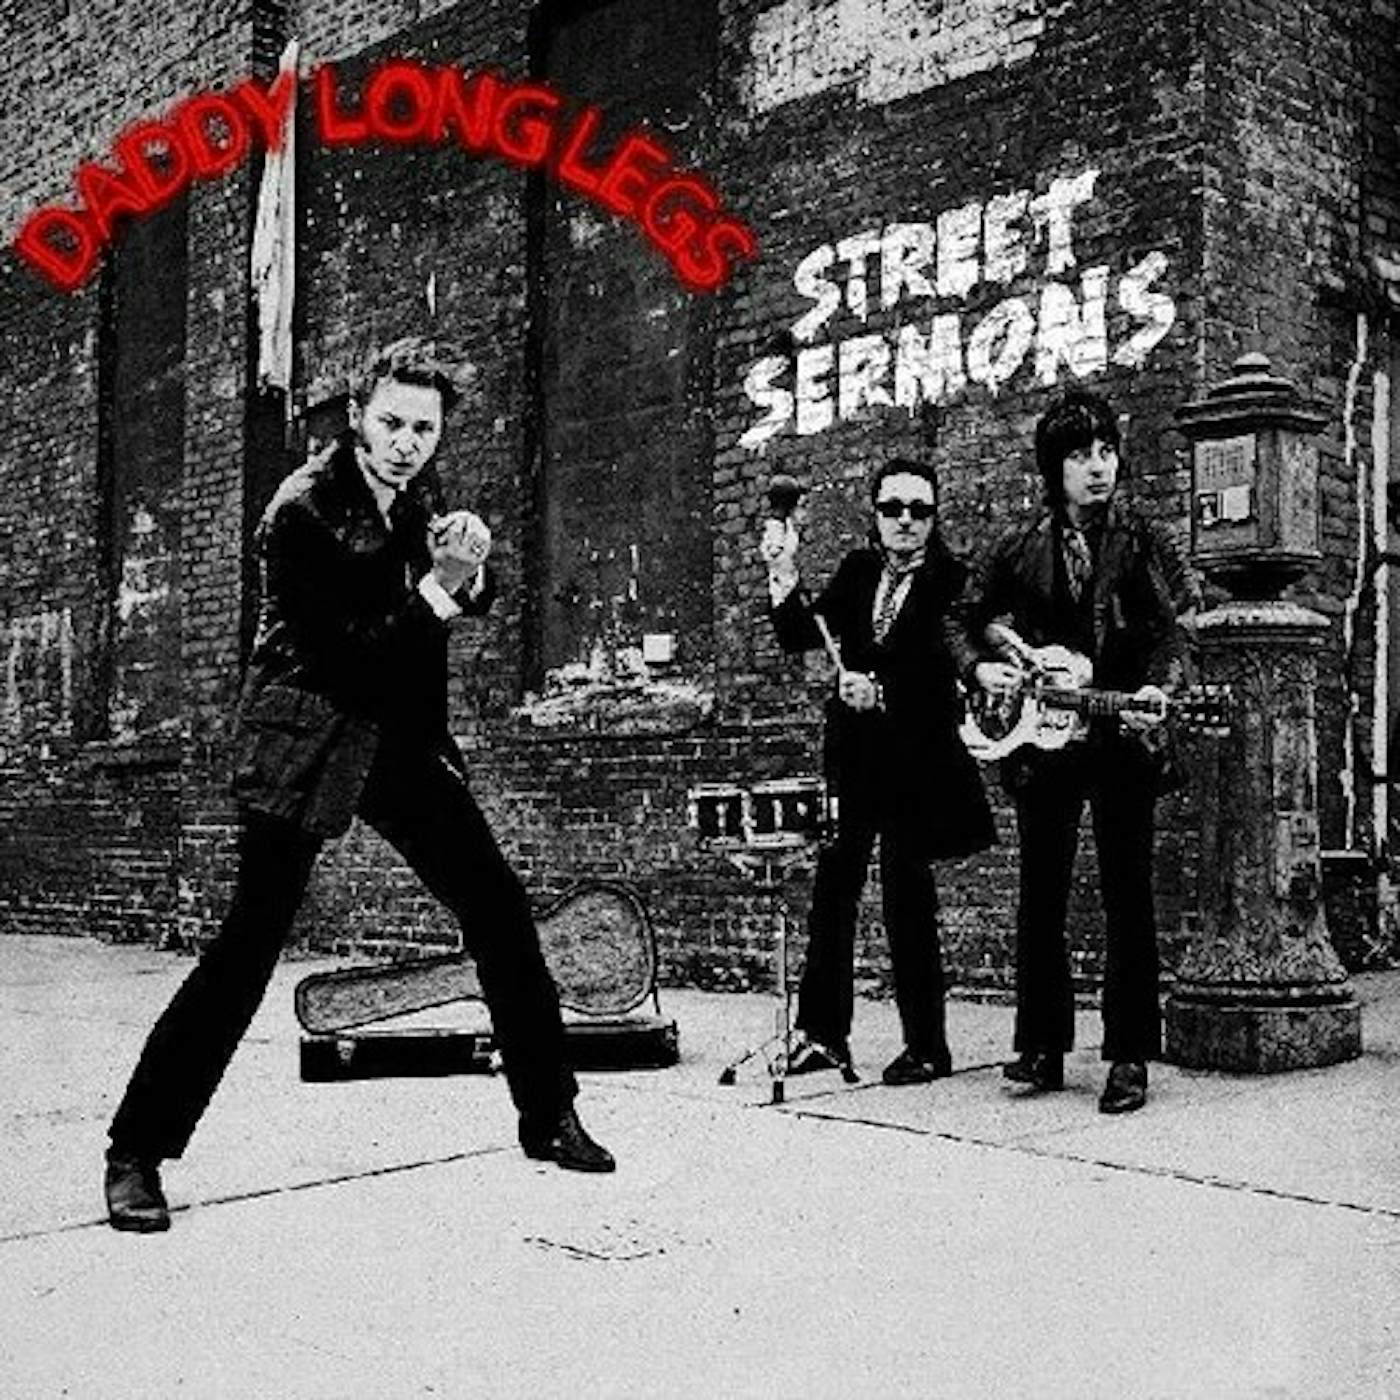 DADDY LONG LEGS STREET SERMONS CD